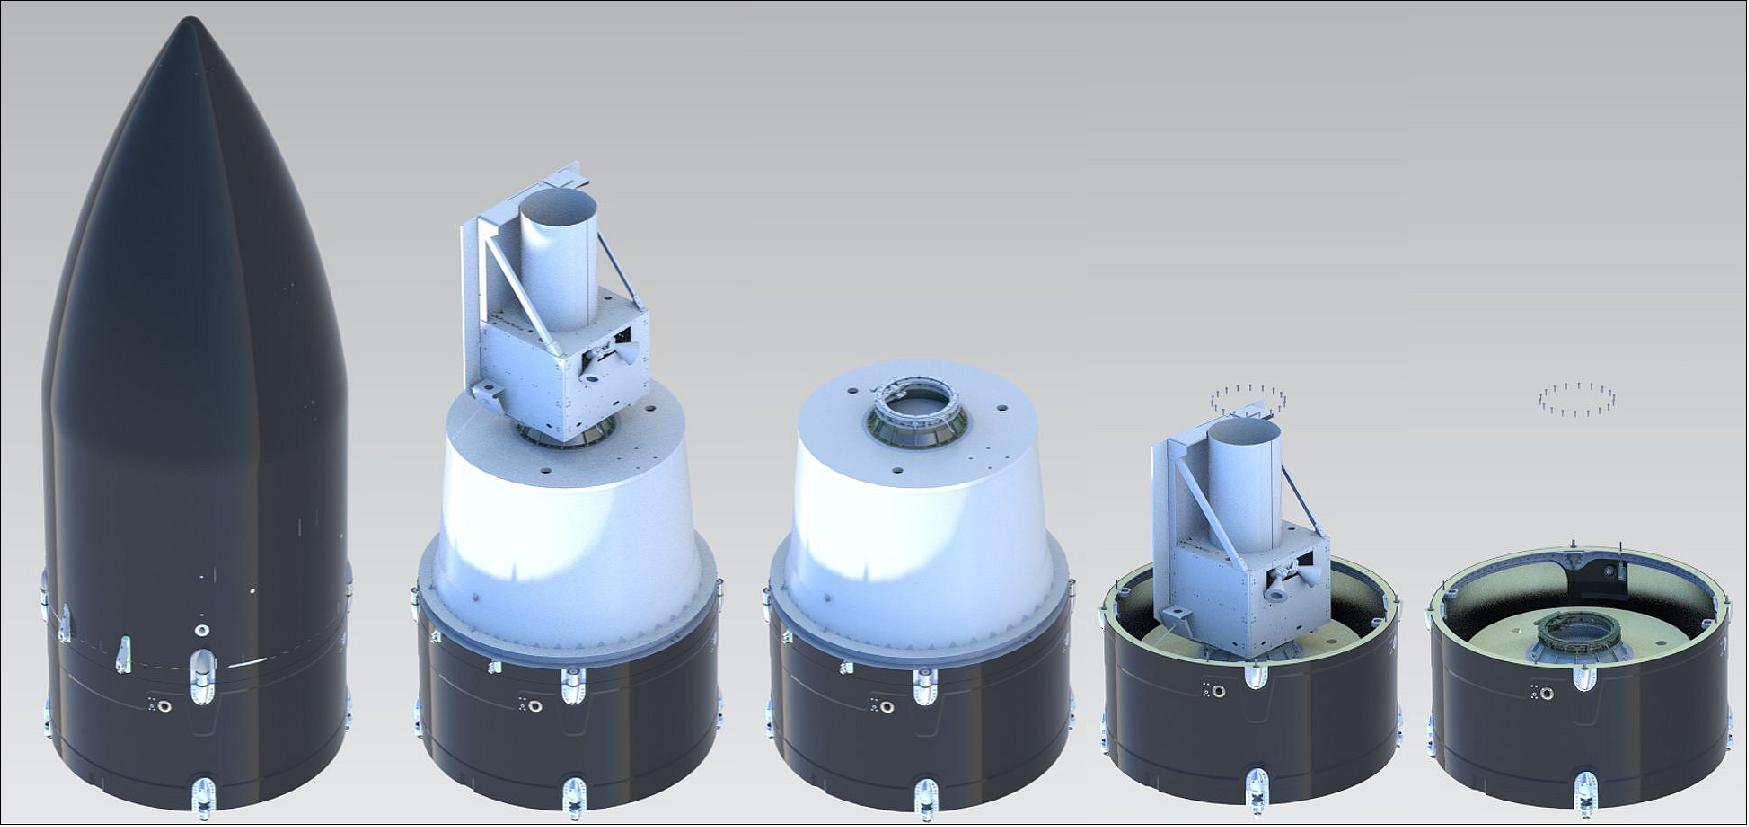 Figure 29: The unique payload separation system used for BlackSky satellites (image credit: Rocket Lab)